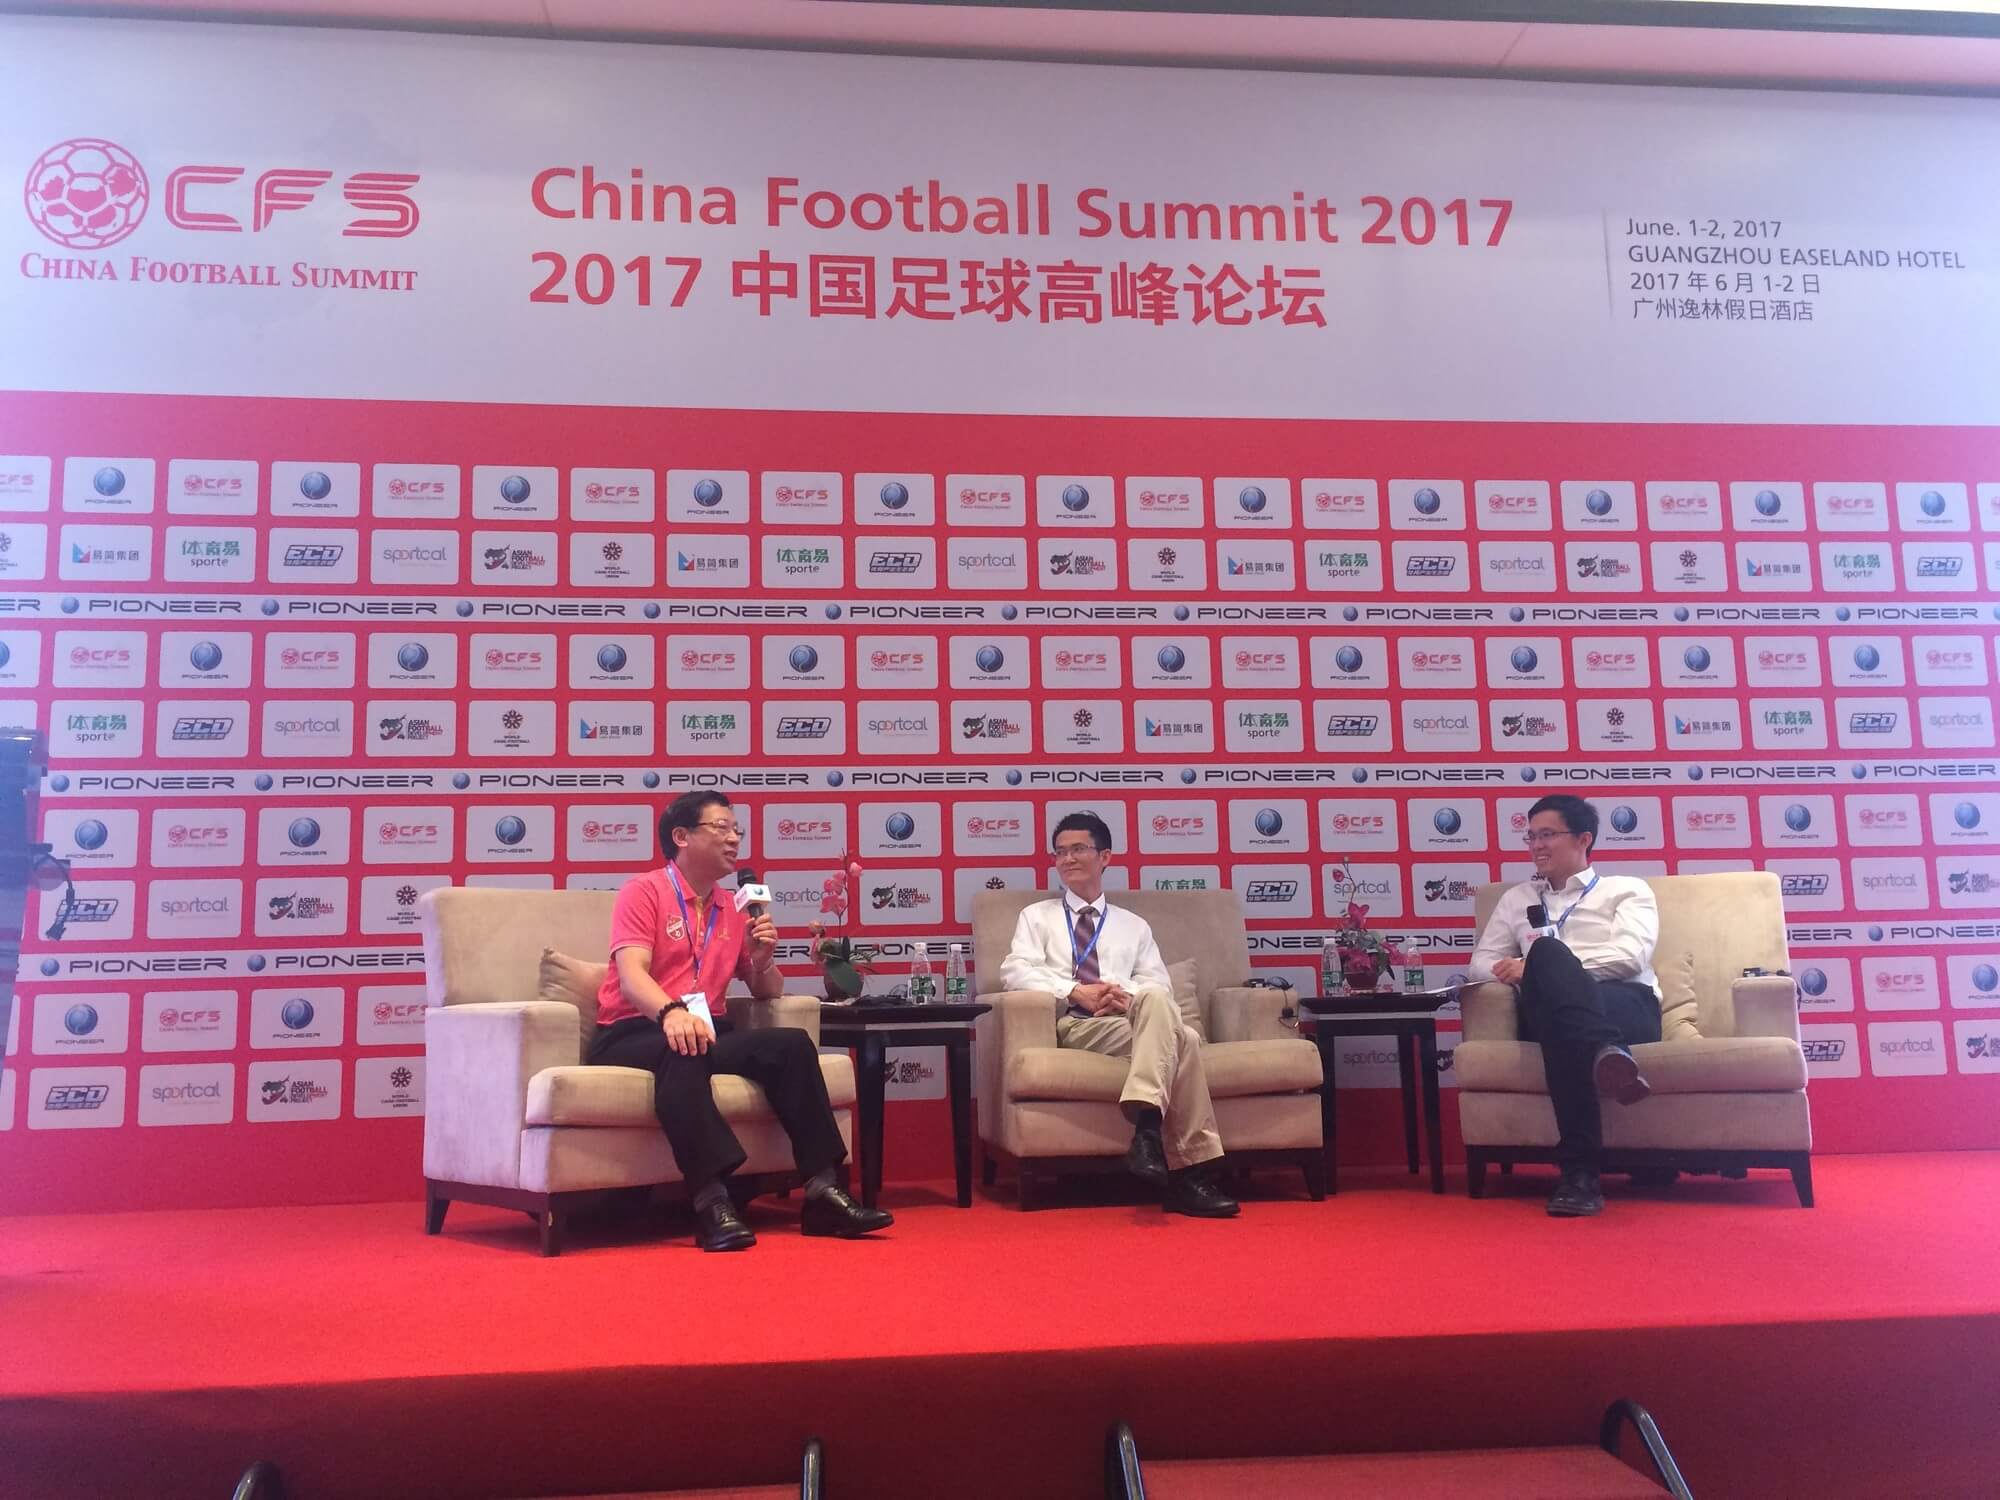 Once China football summit